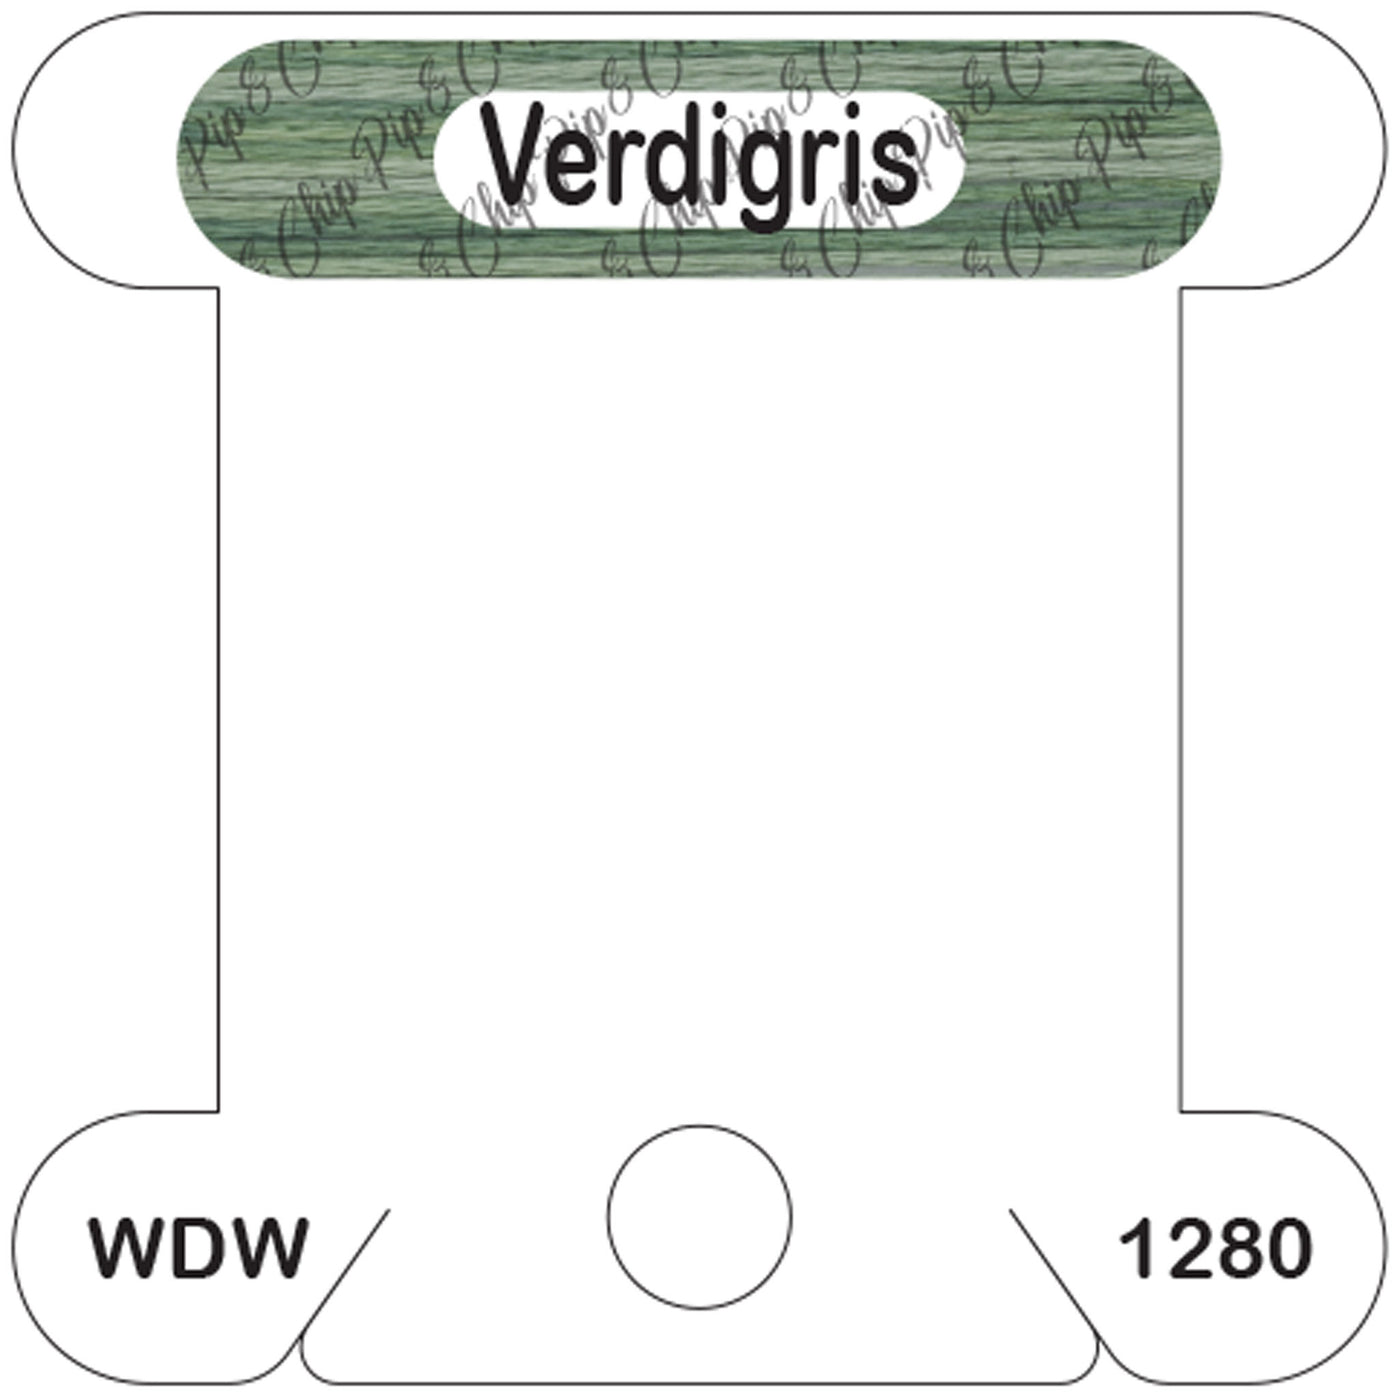 WDW Verdigris acrylic bobbin